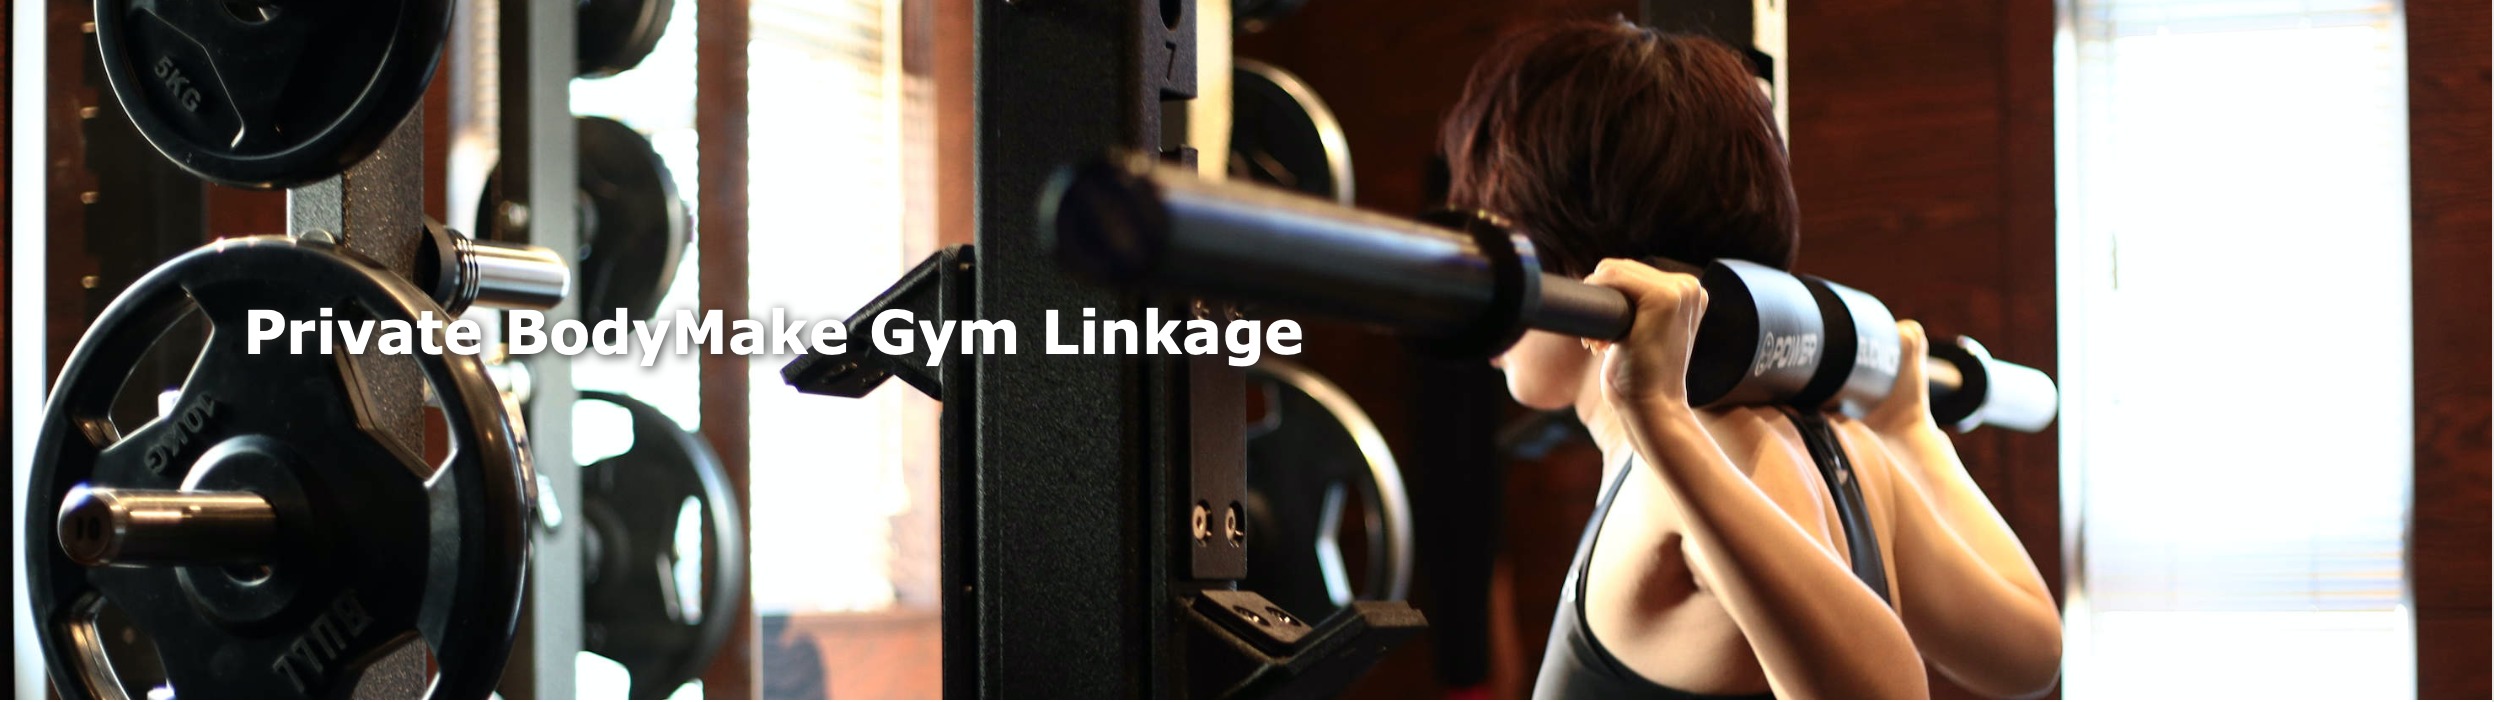 Private BodyMake Gym Linkageの施設画像